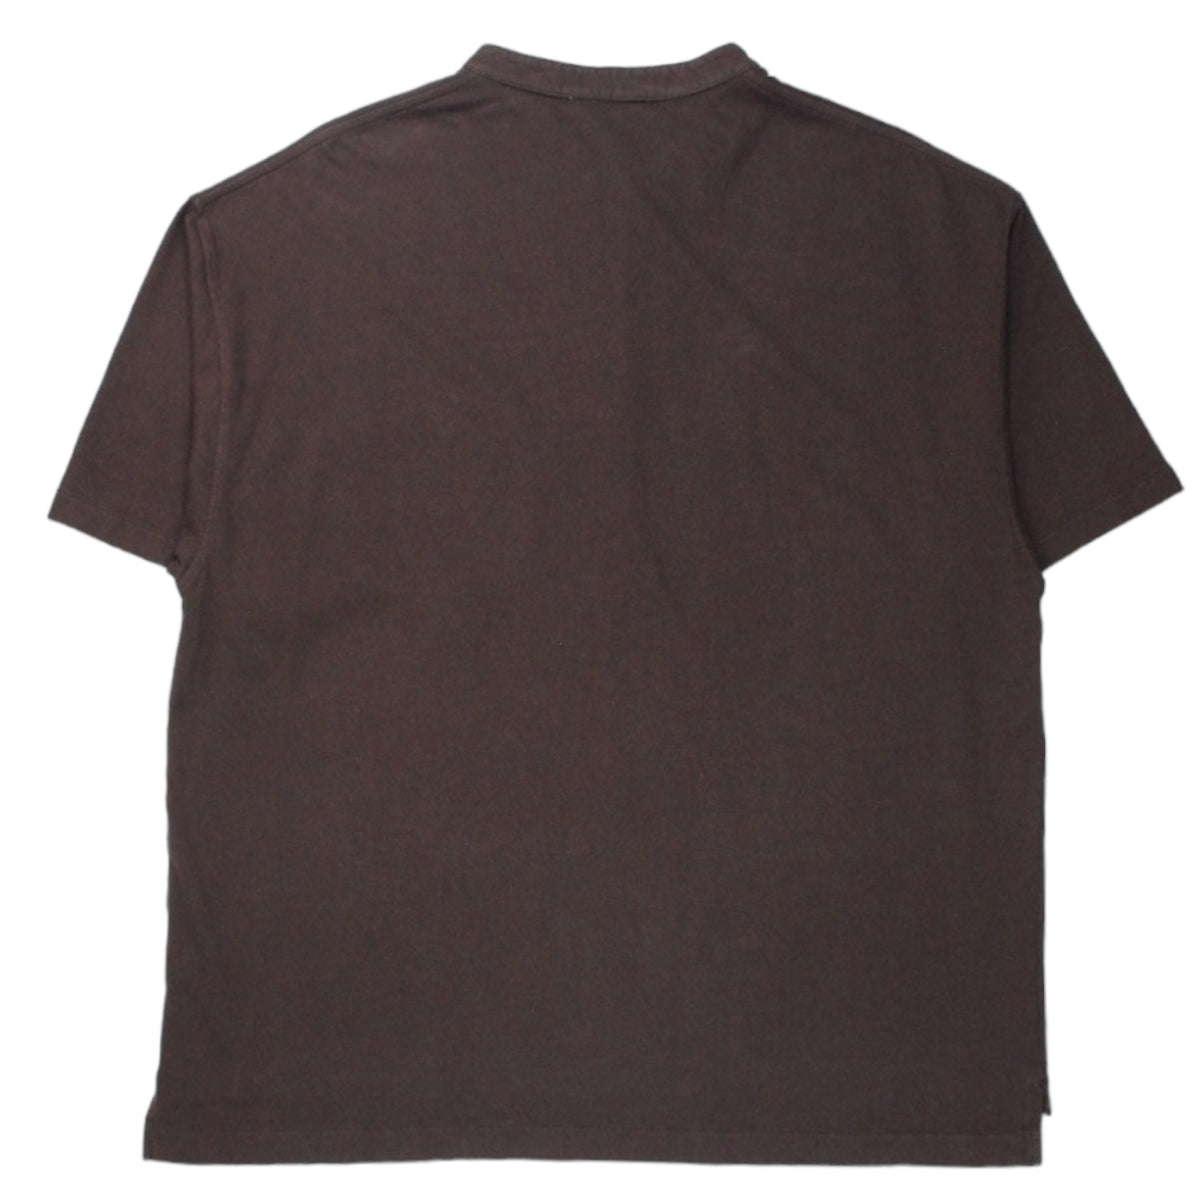 YMC Brown Jersey Collarless Shirt